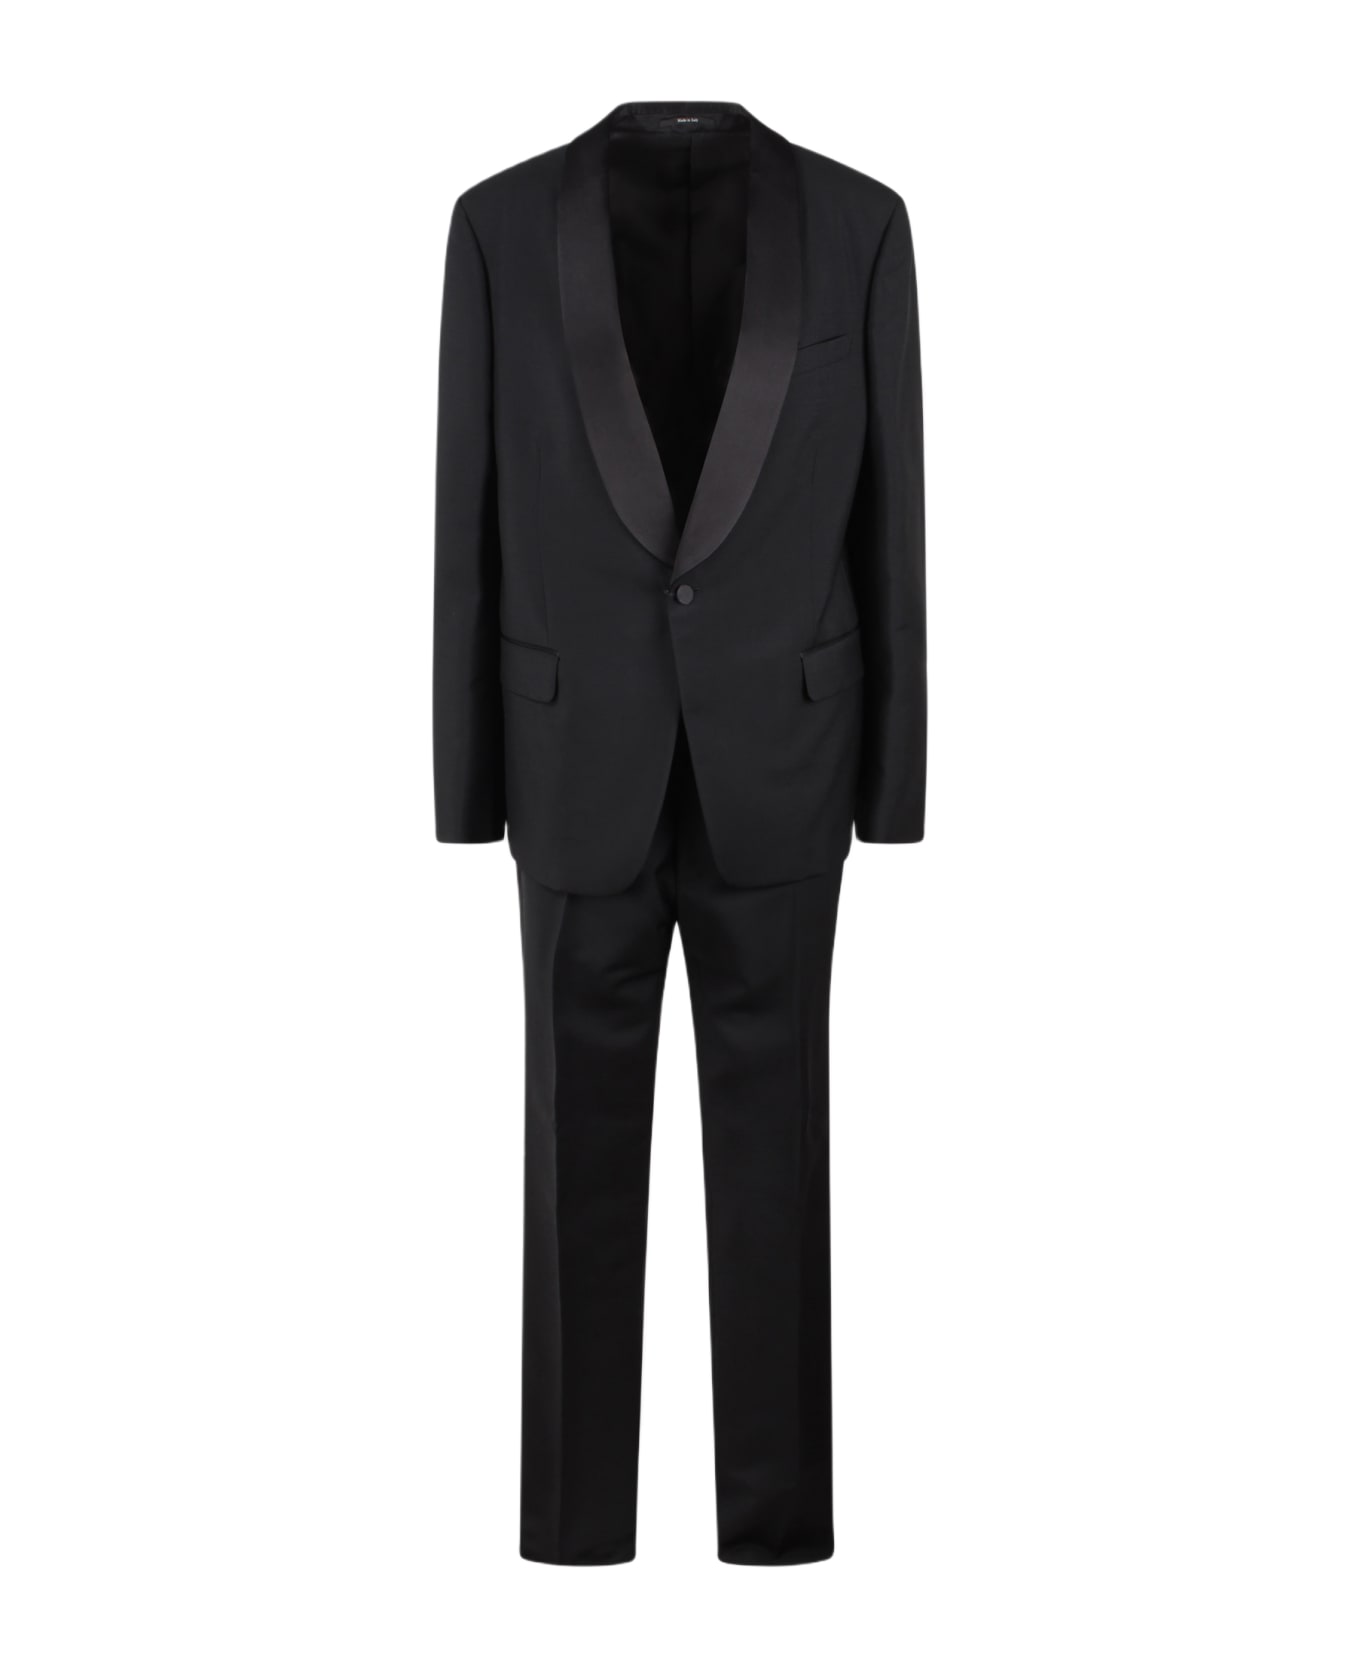 Gucci Slim Fit Wool Suit - Black